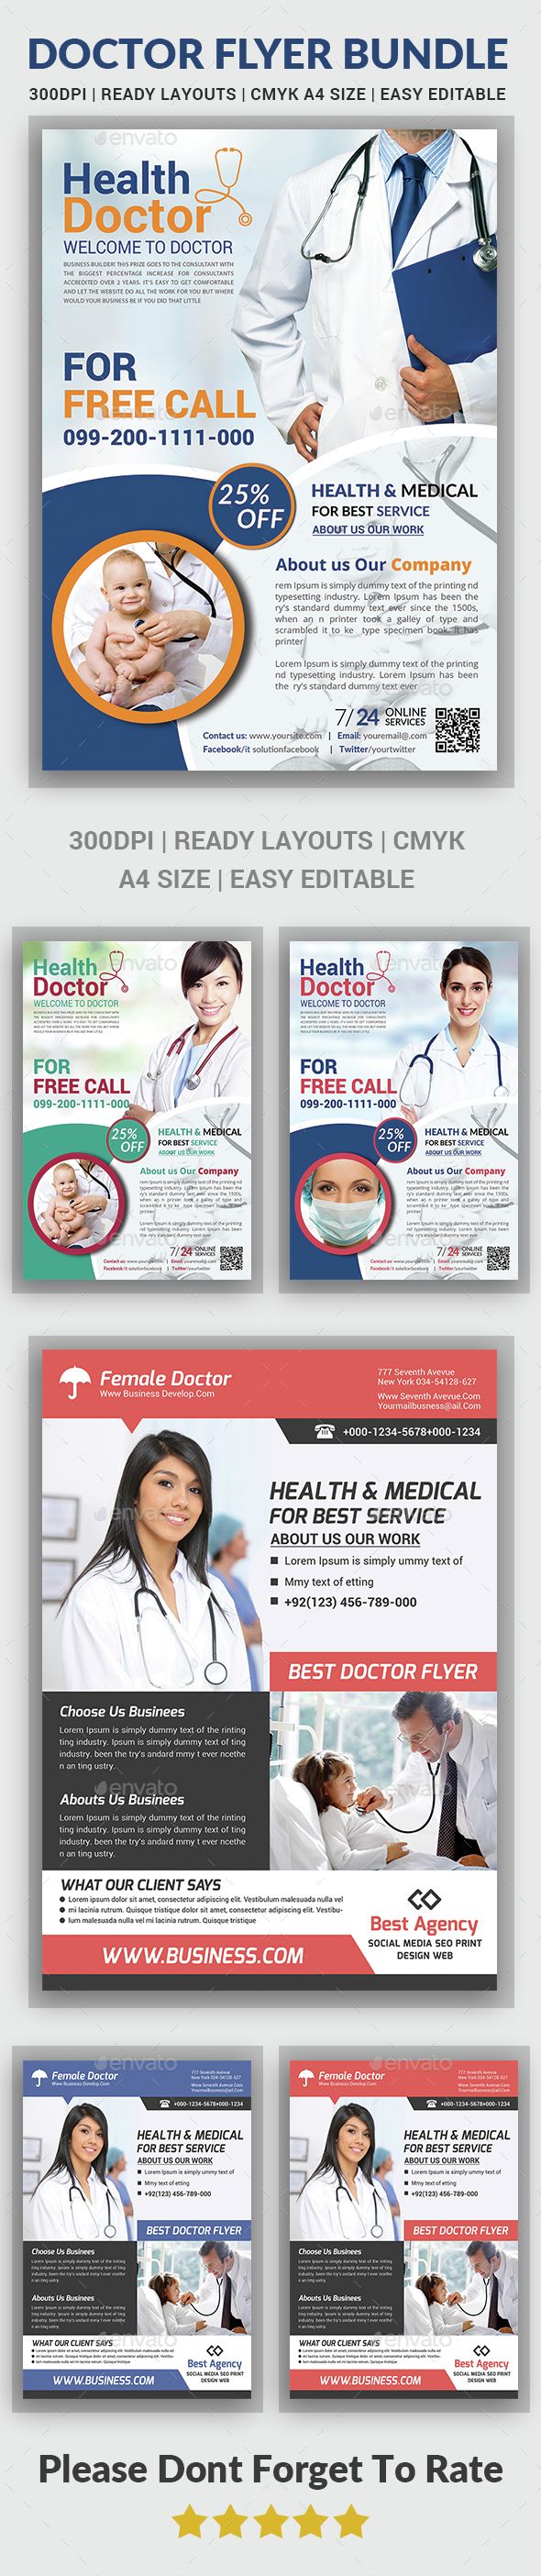 Healthcare-Advertising-Health-Medical-Doctors-Flyer-Bundle-Corporate-Flyers Healthcare Advertising : Health & Medical Doctors Flyer Bundle - Corporate Flyers